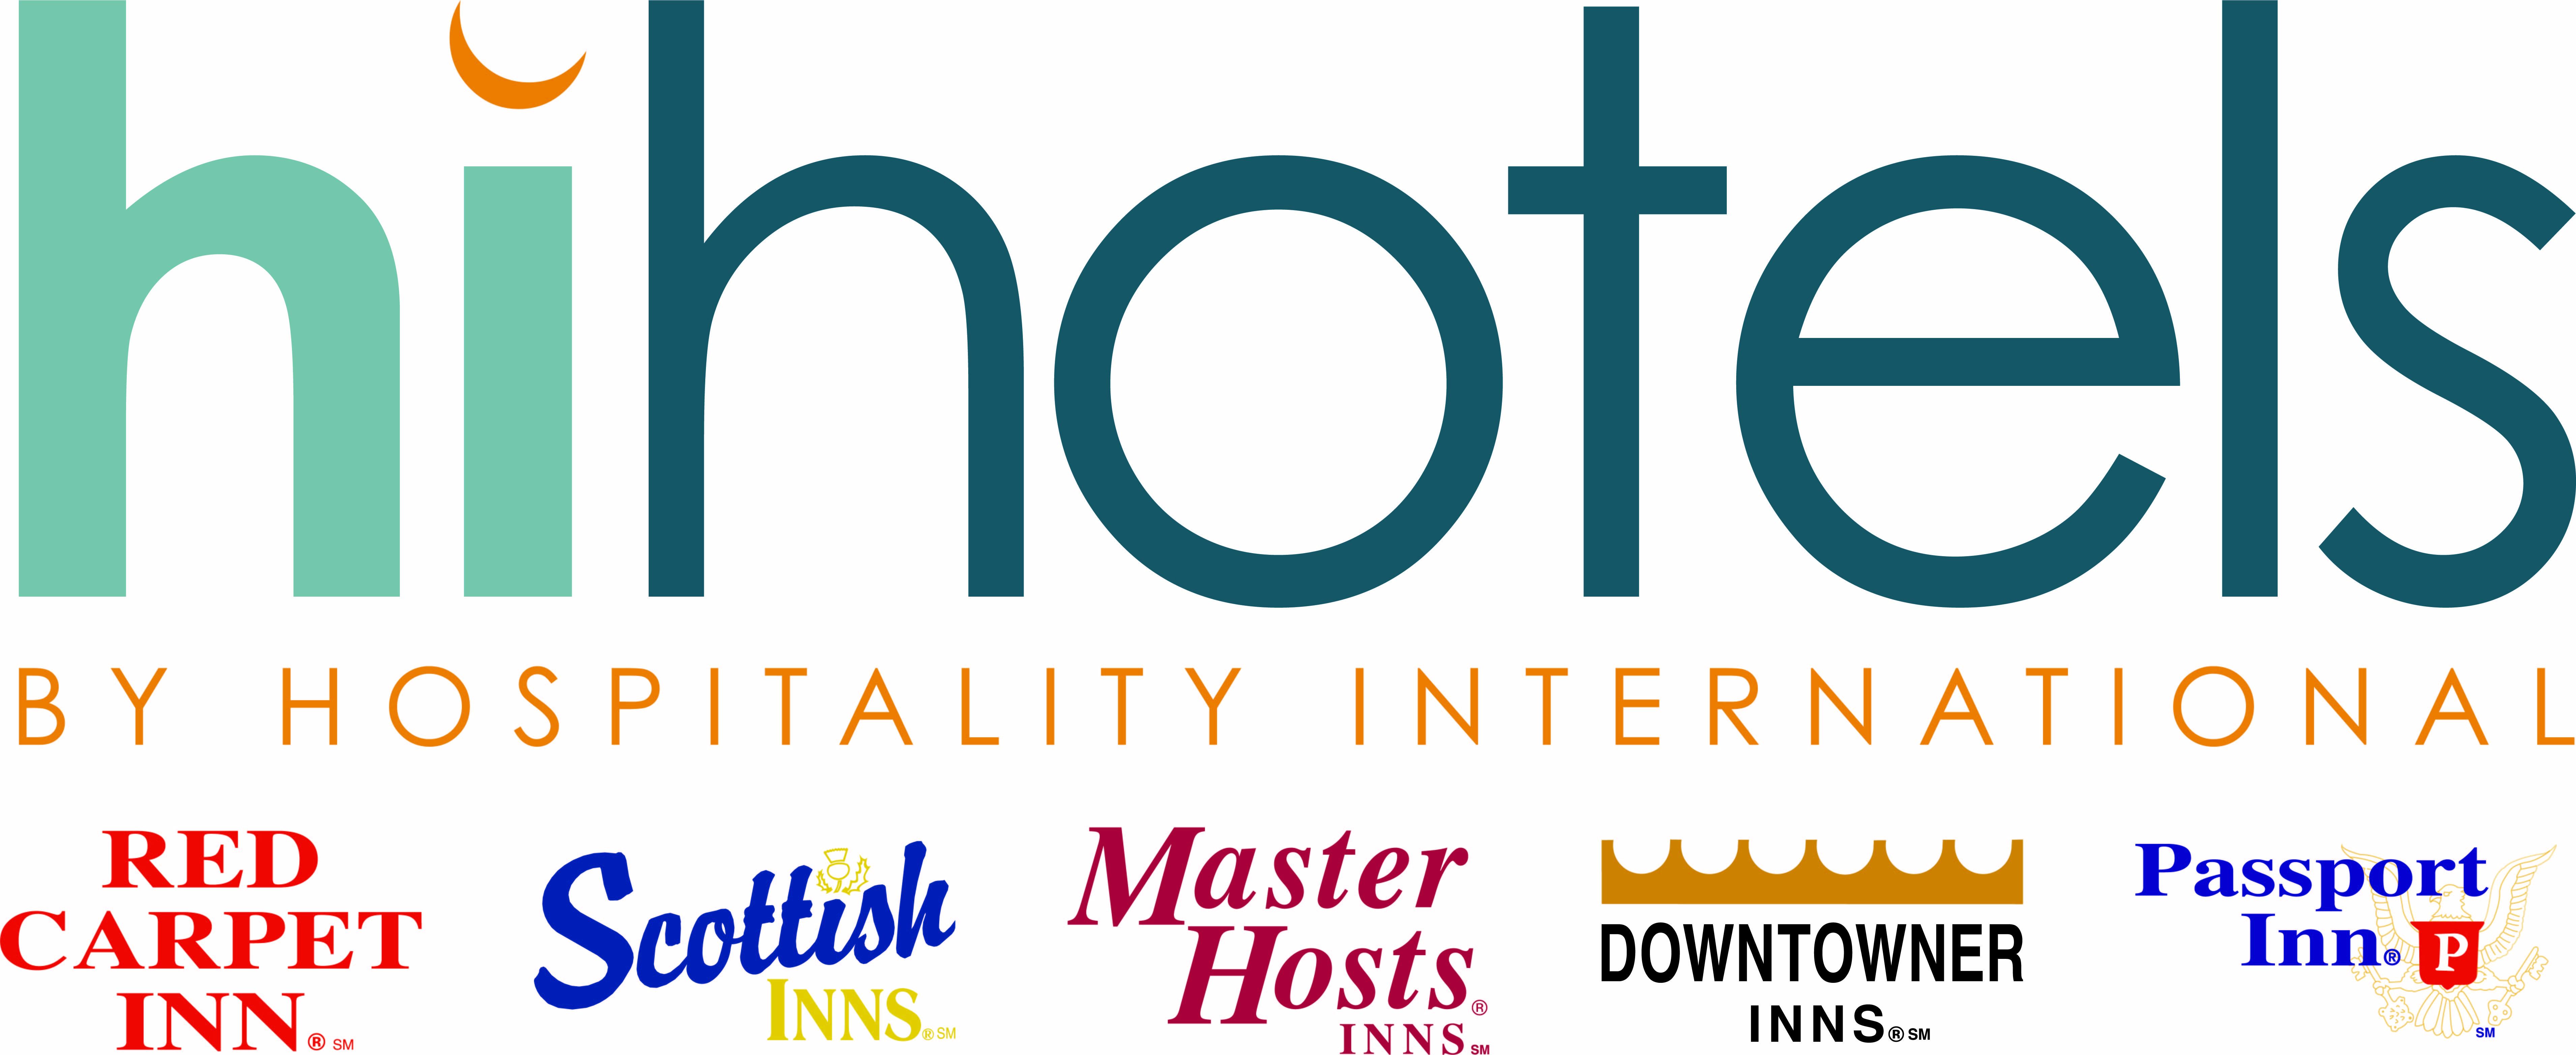 Hihotels By Hospitality International Reveals 2020 Award Winners ?t=1591631122